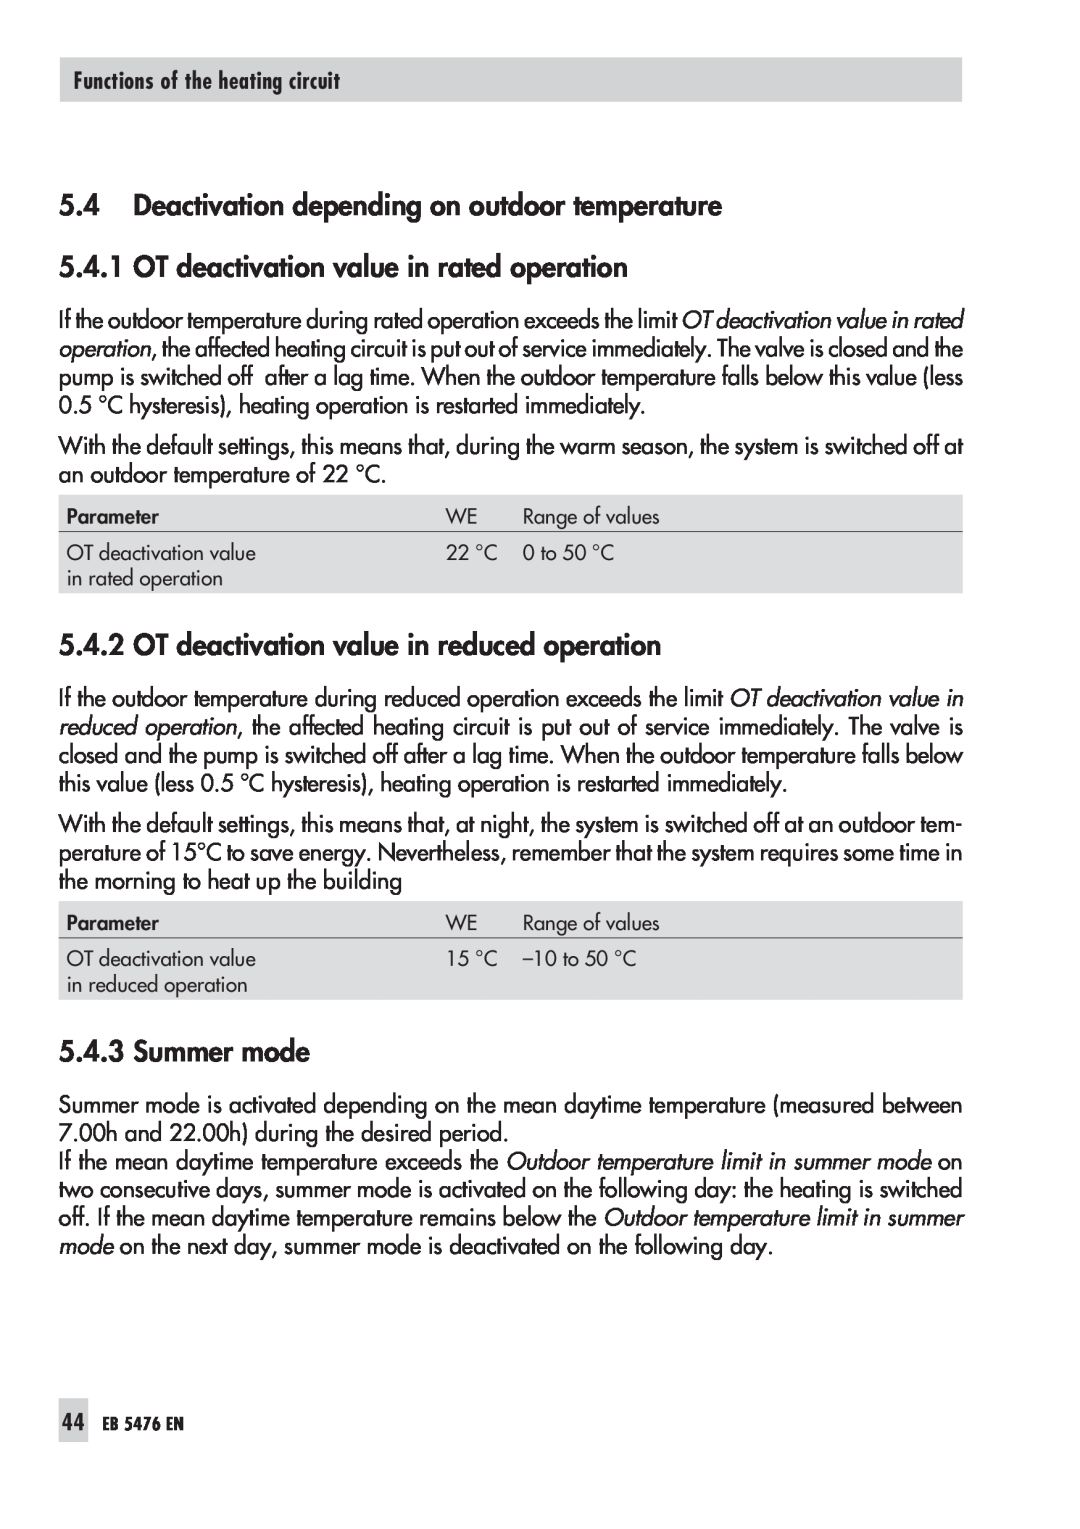 Samson 5476 manual 5.4Deactivation depending on outdoor temperature, OT deactivation value in rated operation, Summer mode 